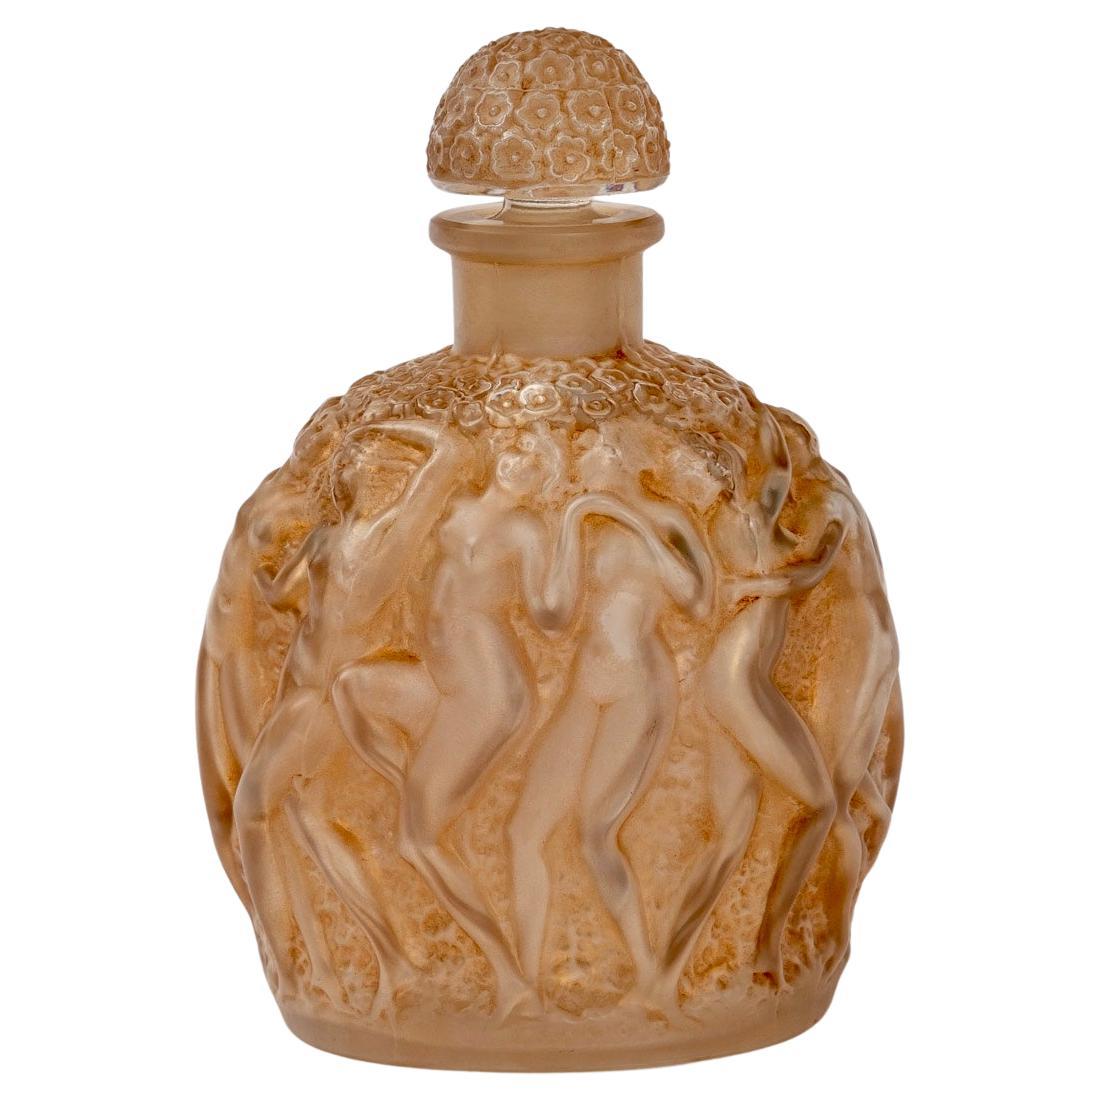 1937 Rene Lalique Perfume Bottle Calendal for Molinard Glass Sepia Patina